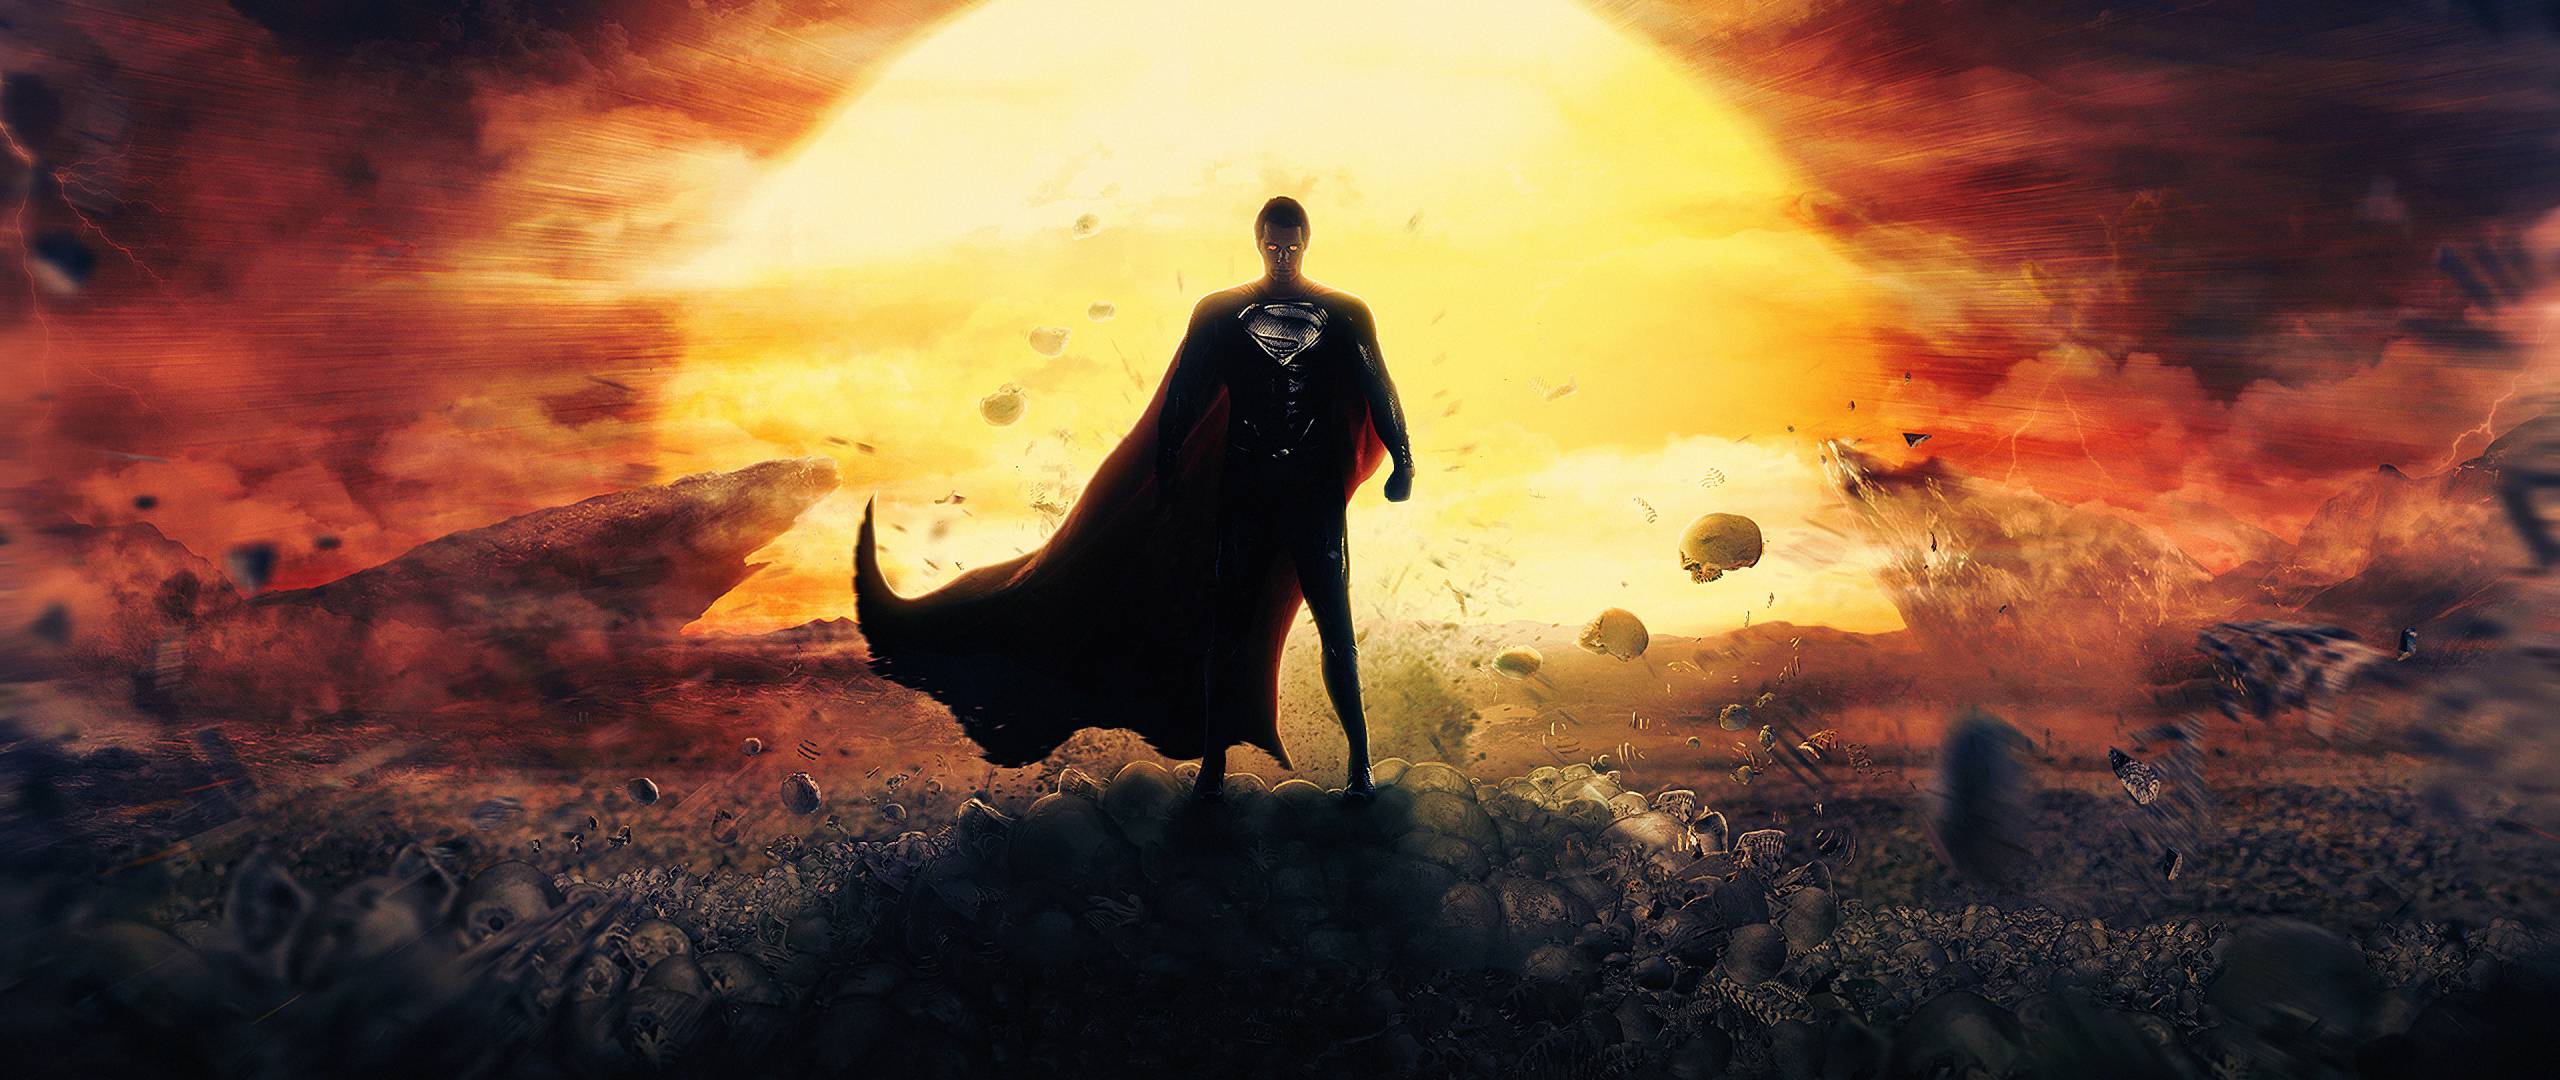 Superman Logo 4K Wallpapers - Top Free Superman Logo 4K Backgrounds ...